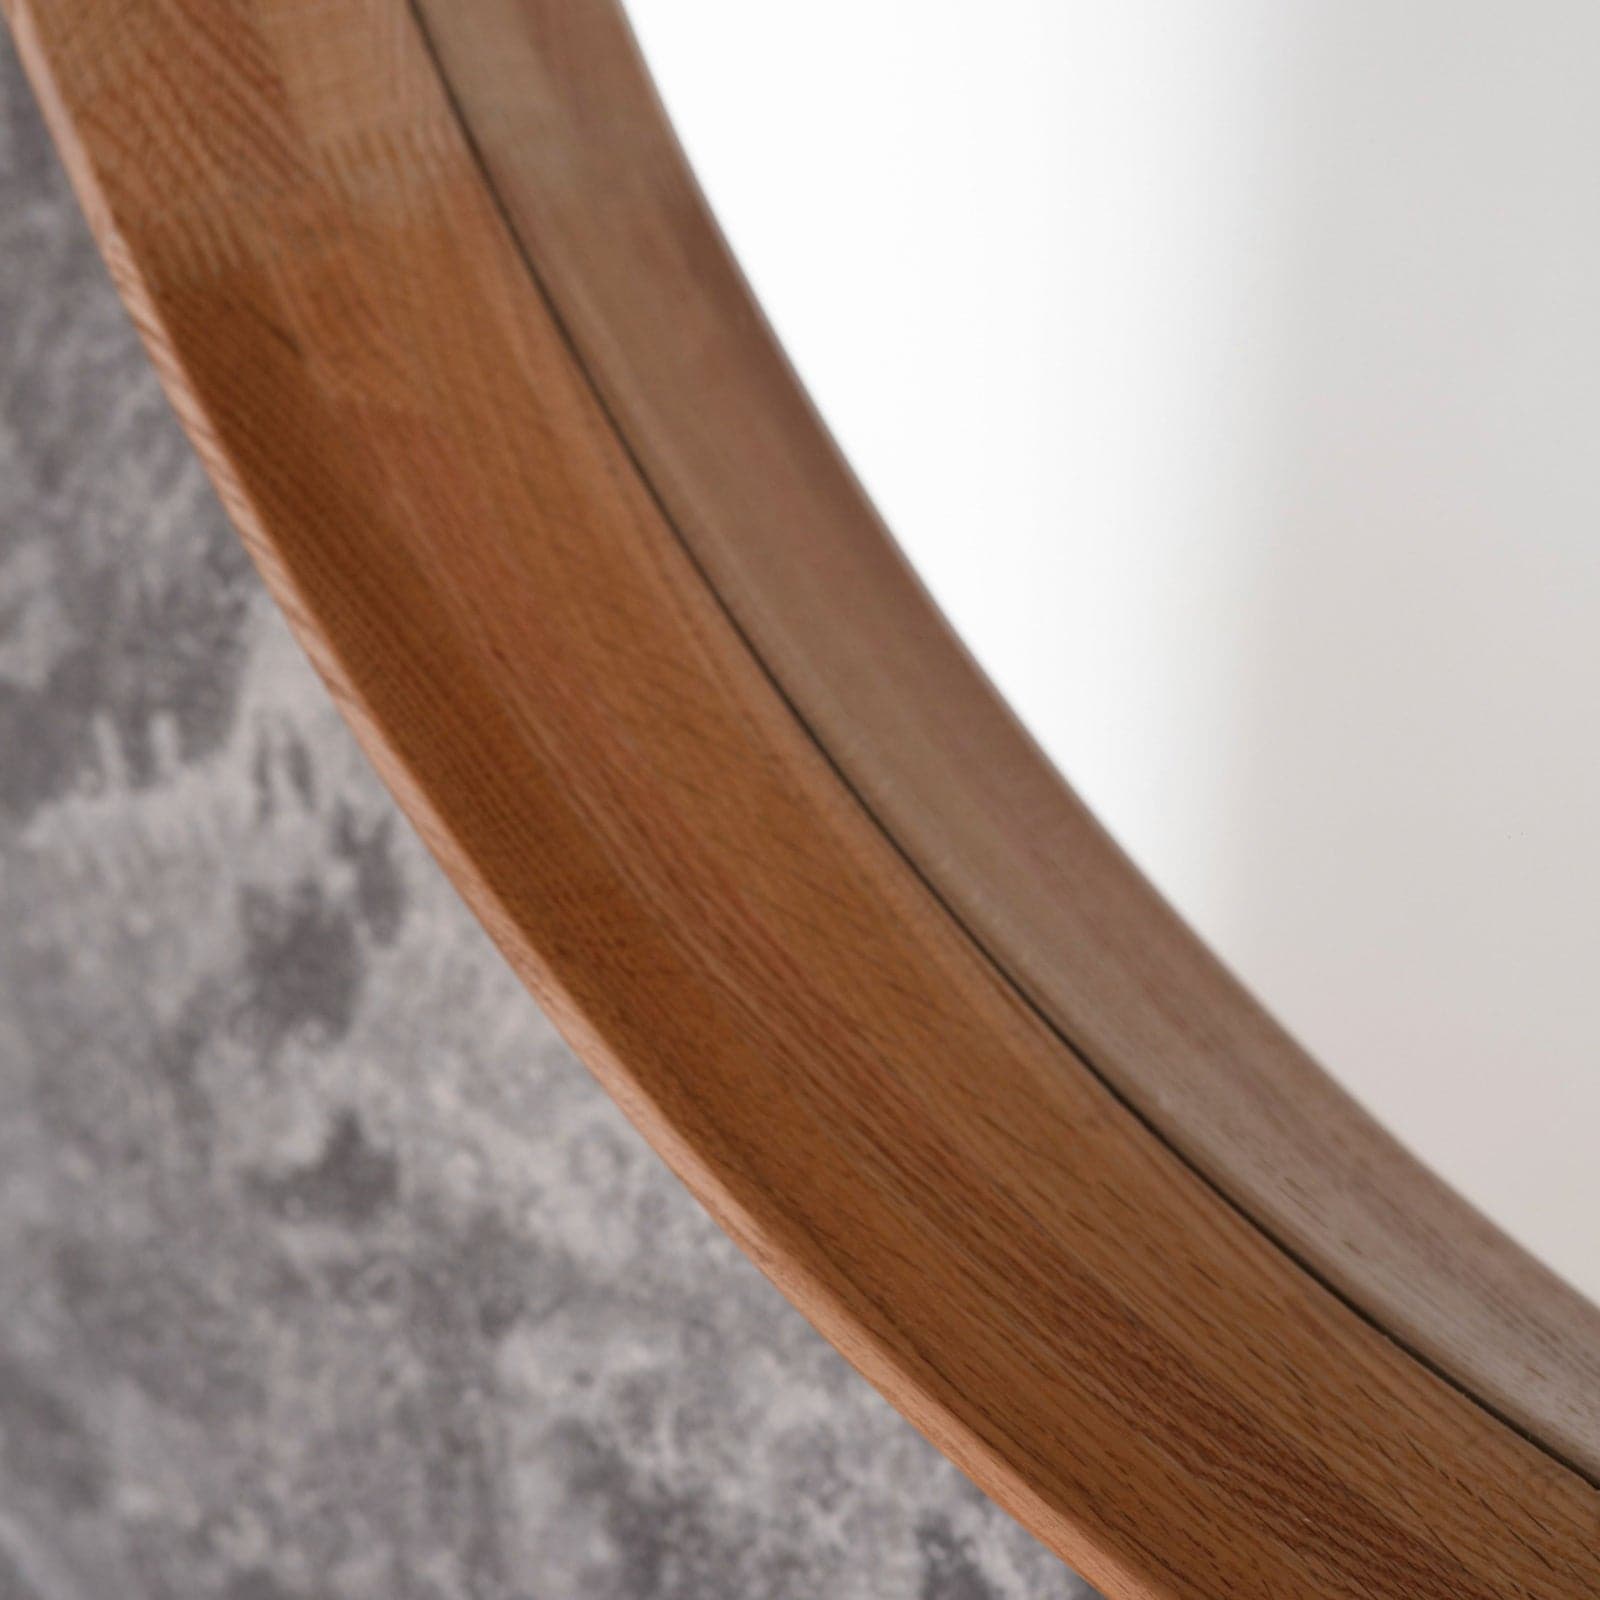 Oak Framed Round Mirror - The Farthing